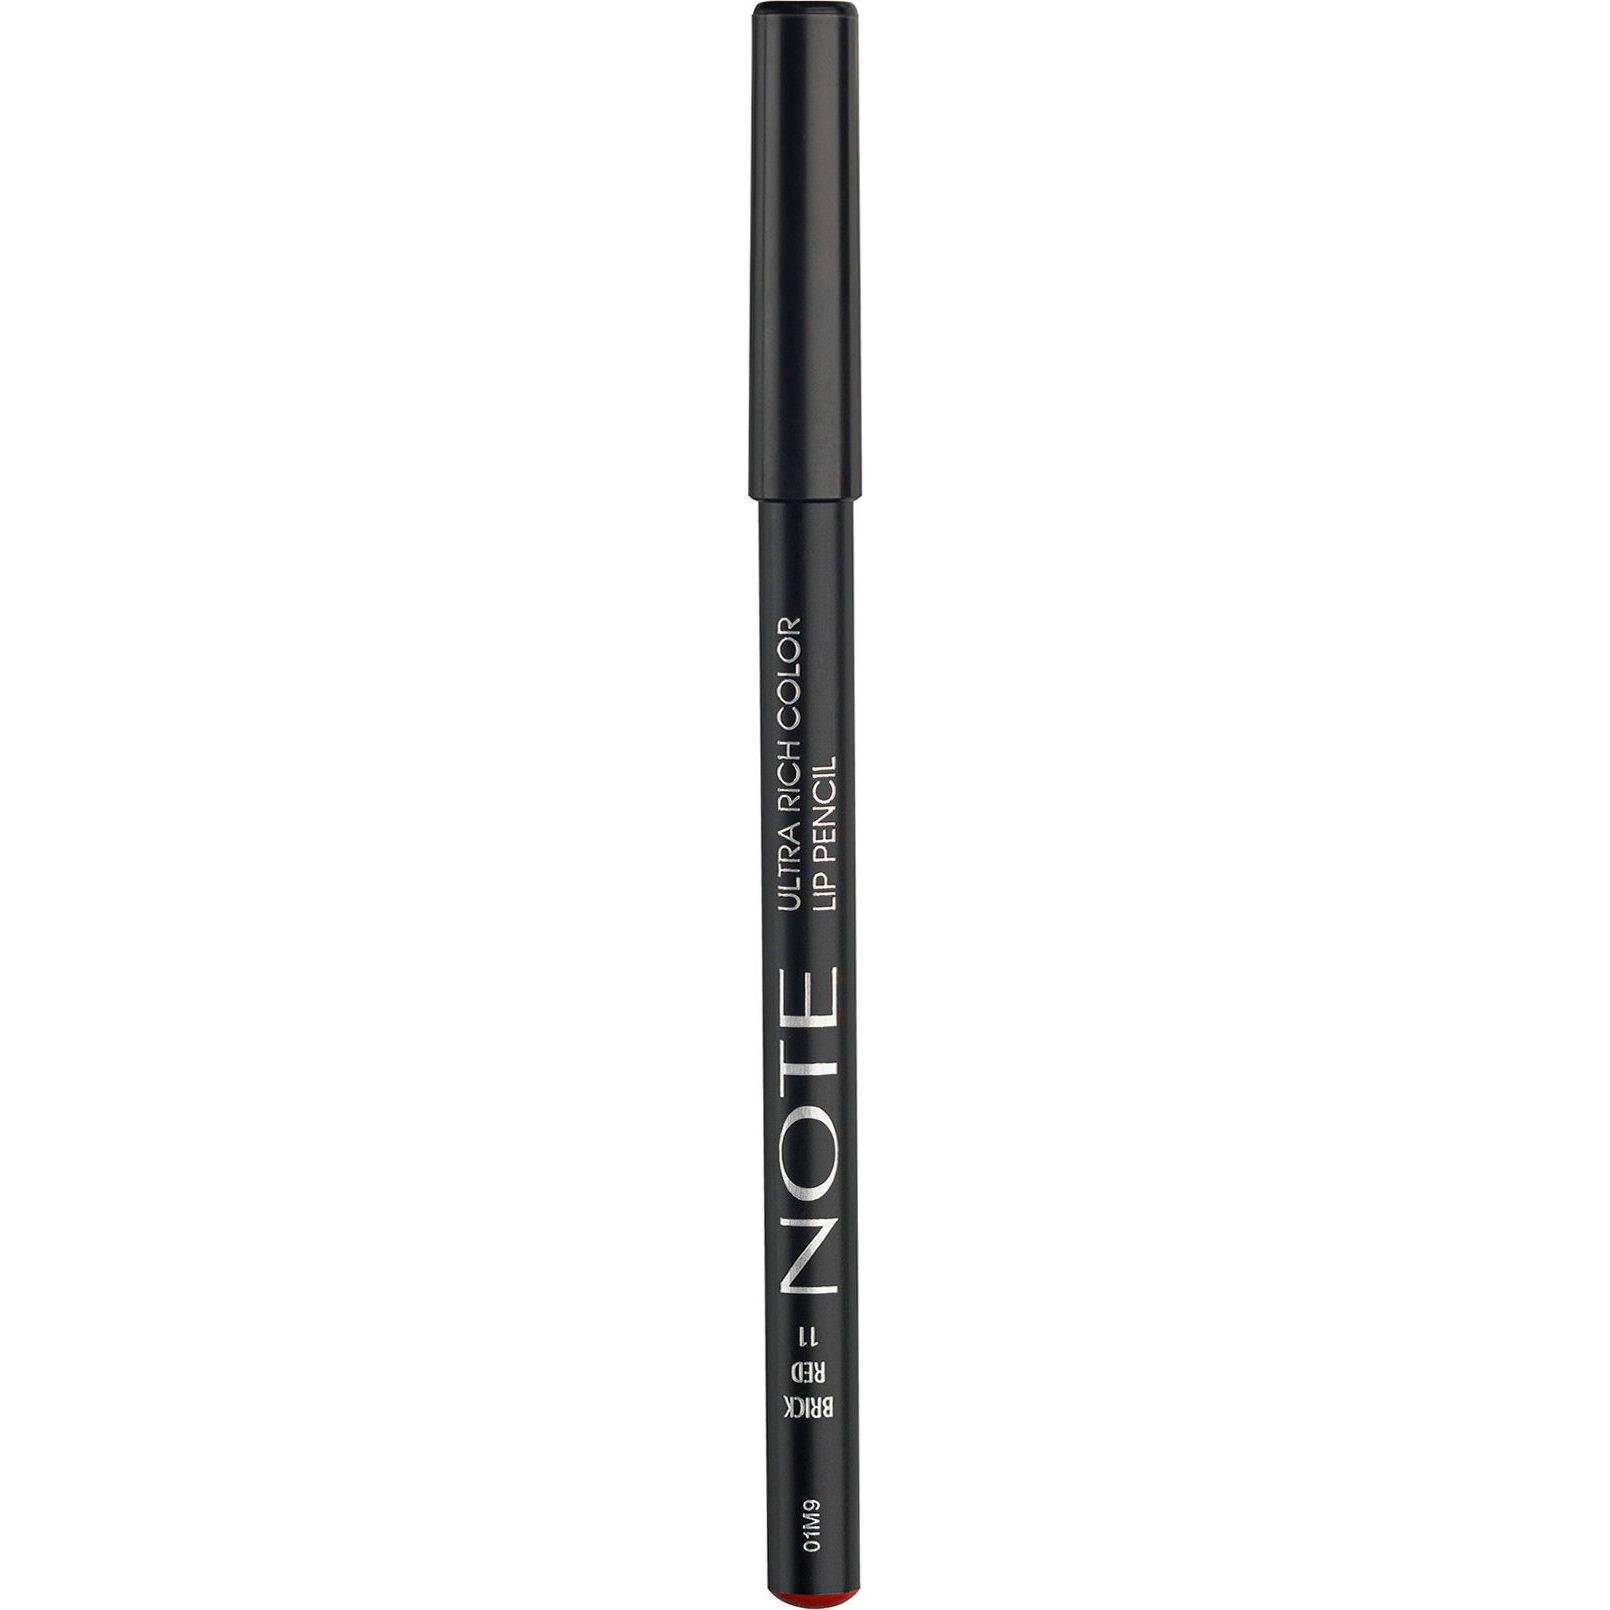 Олівець для губ Note Cosmetique Ultra Rich Color Lip Pencil відтінок 11 (Brick Red) 1.1 г - фото 1